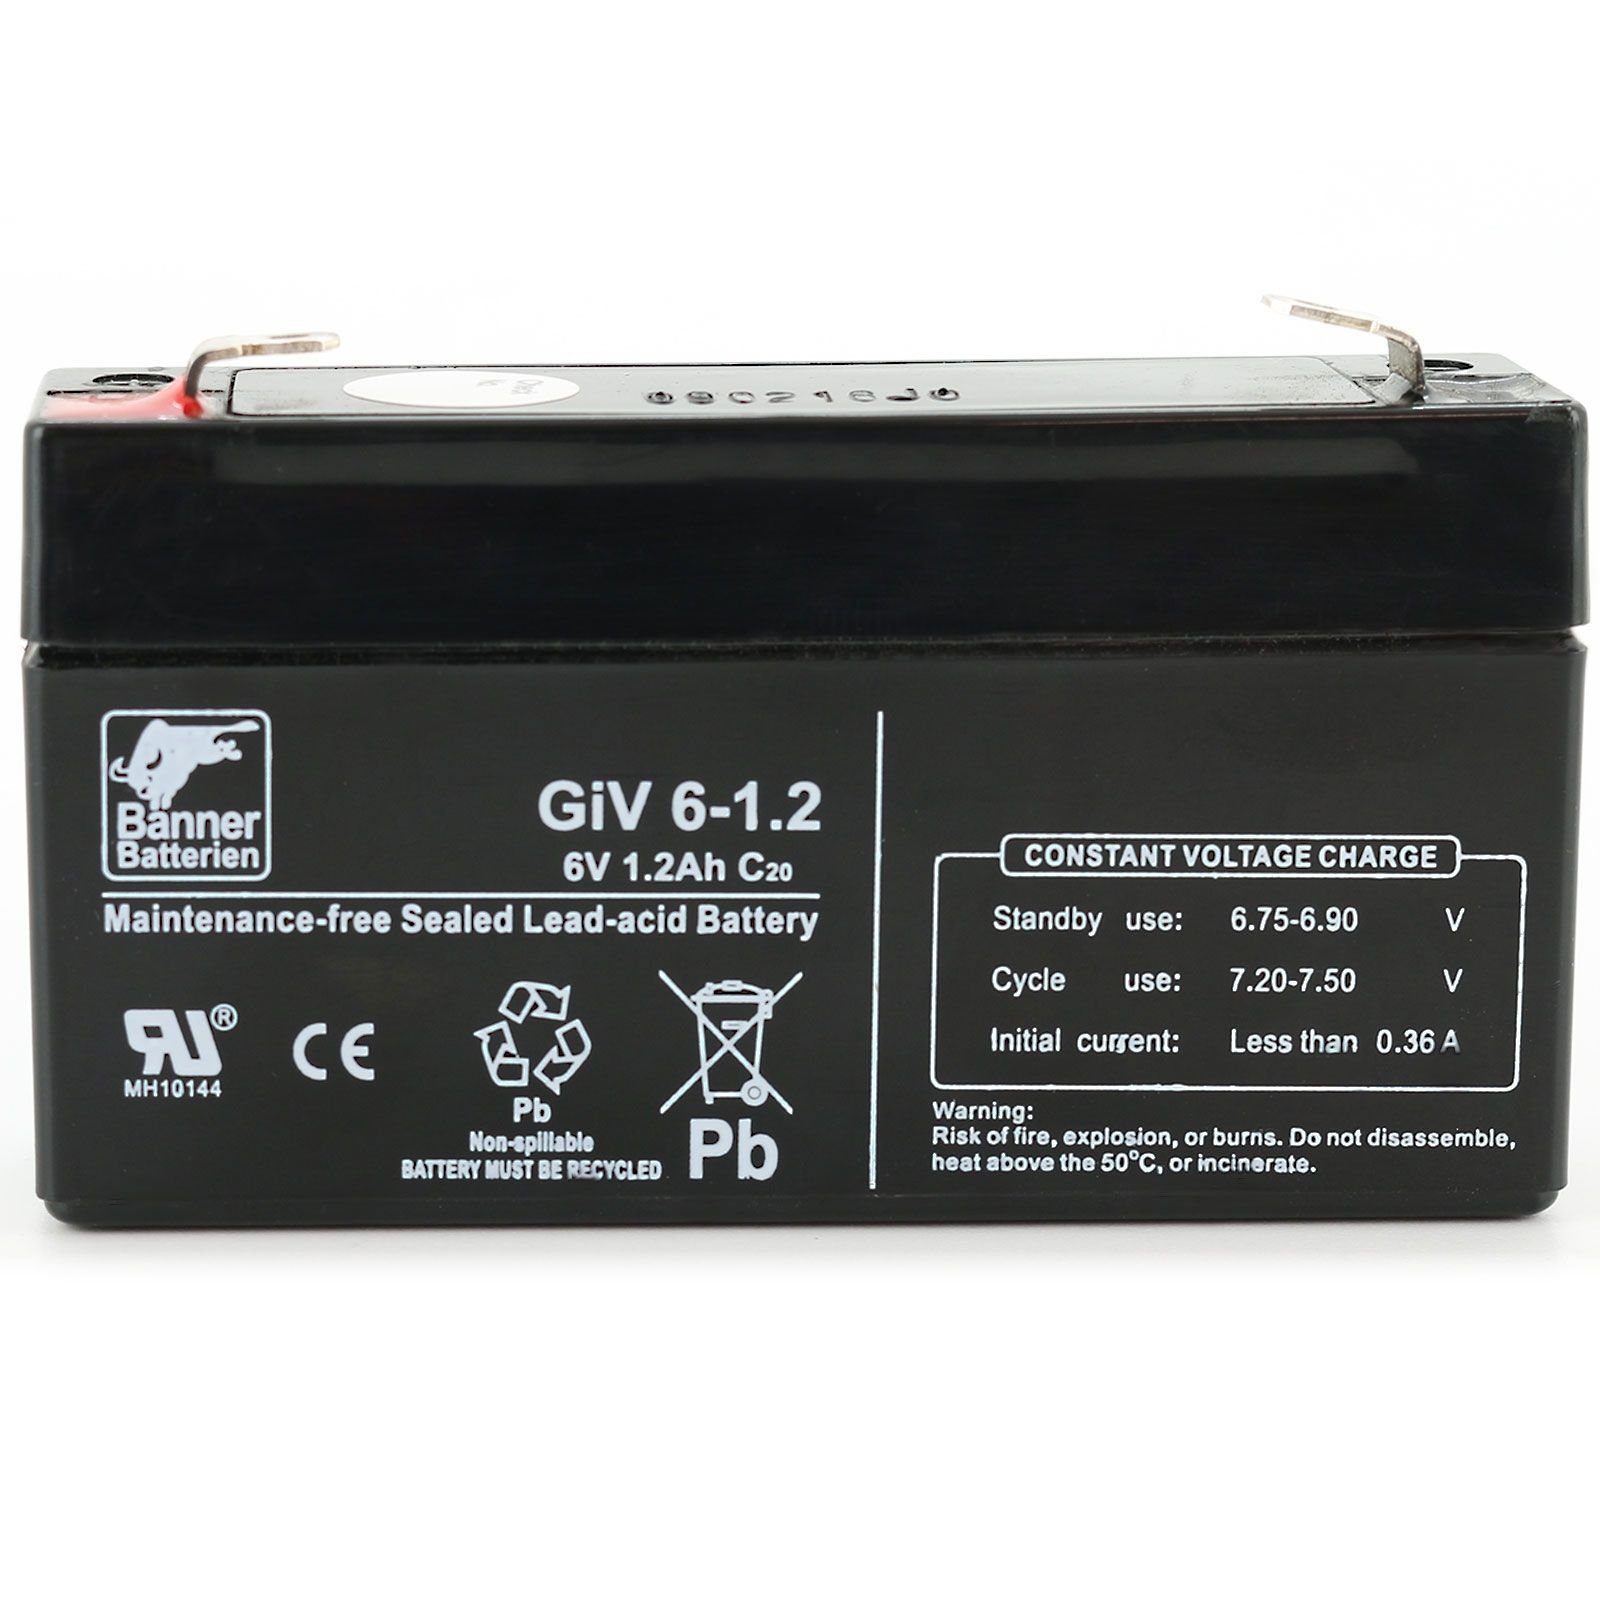 Volt GiV 6 1,2Ah Batterien GiV Volt 1,2Ah Banner Batterie, Bull Stand by 06-1.2 06-1.2 6 Batterie